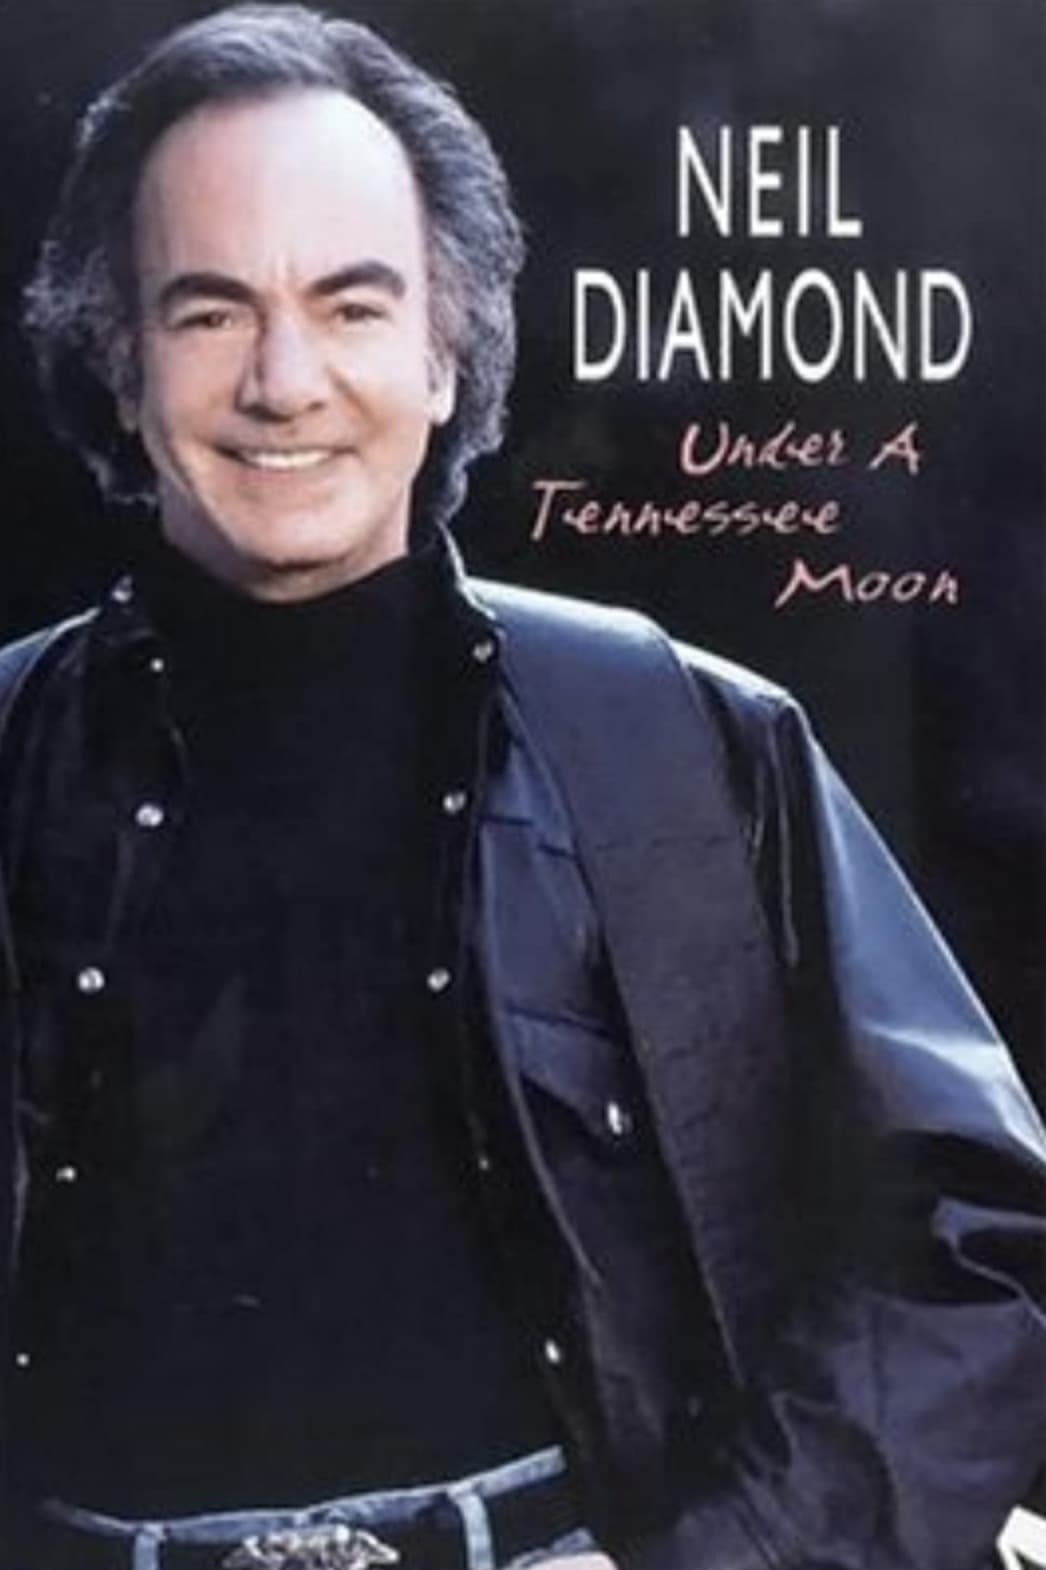 Neil Diamond: Under a Tennessee Moon